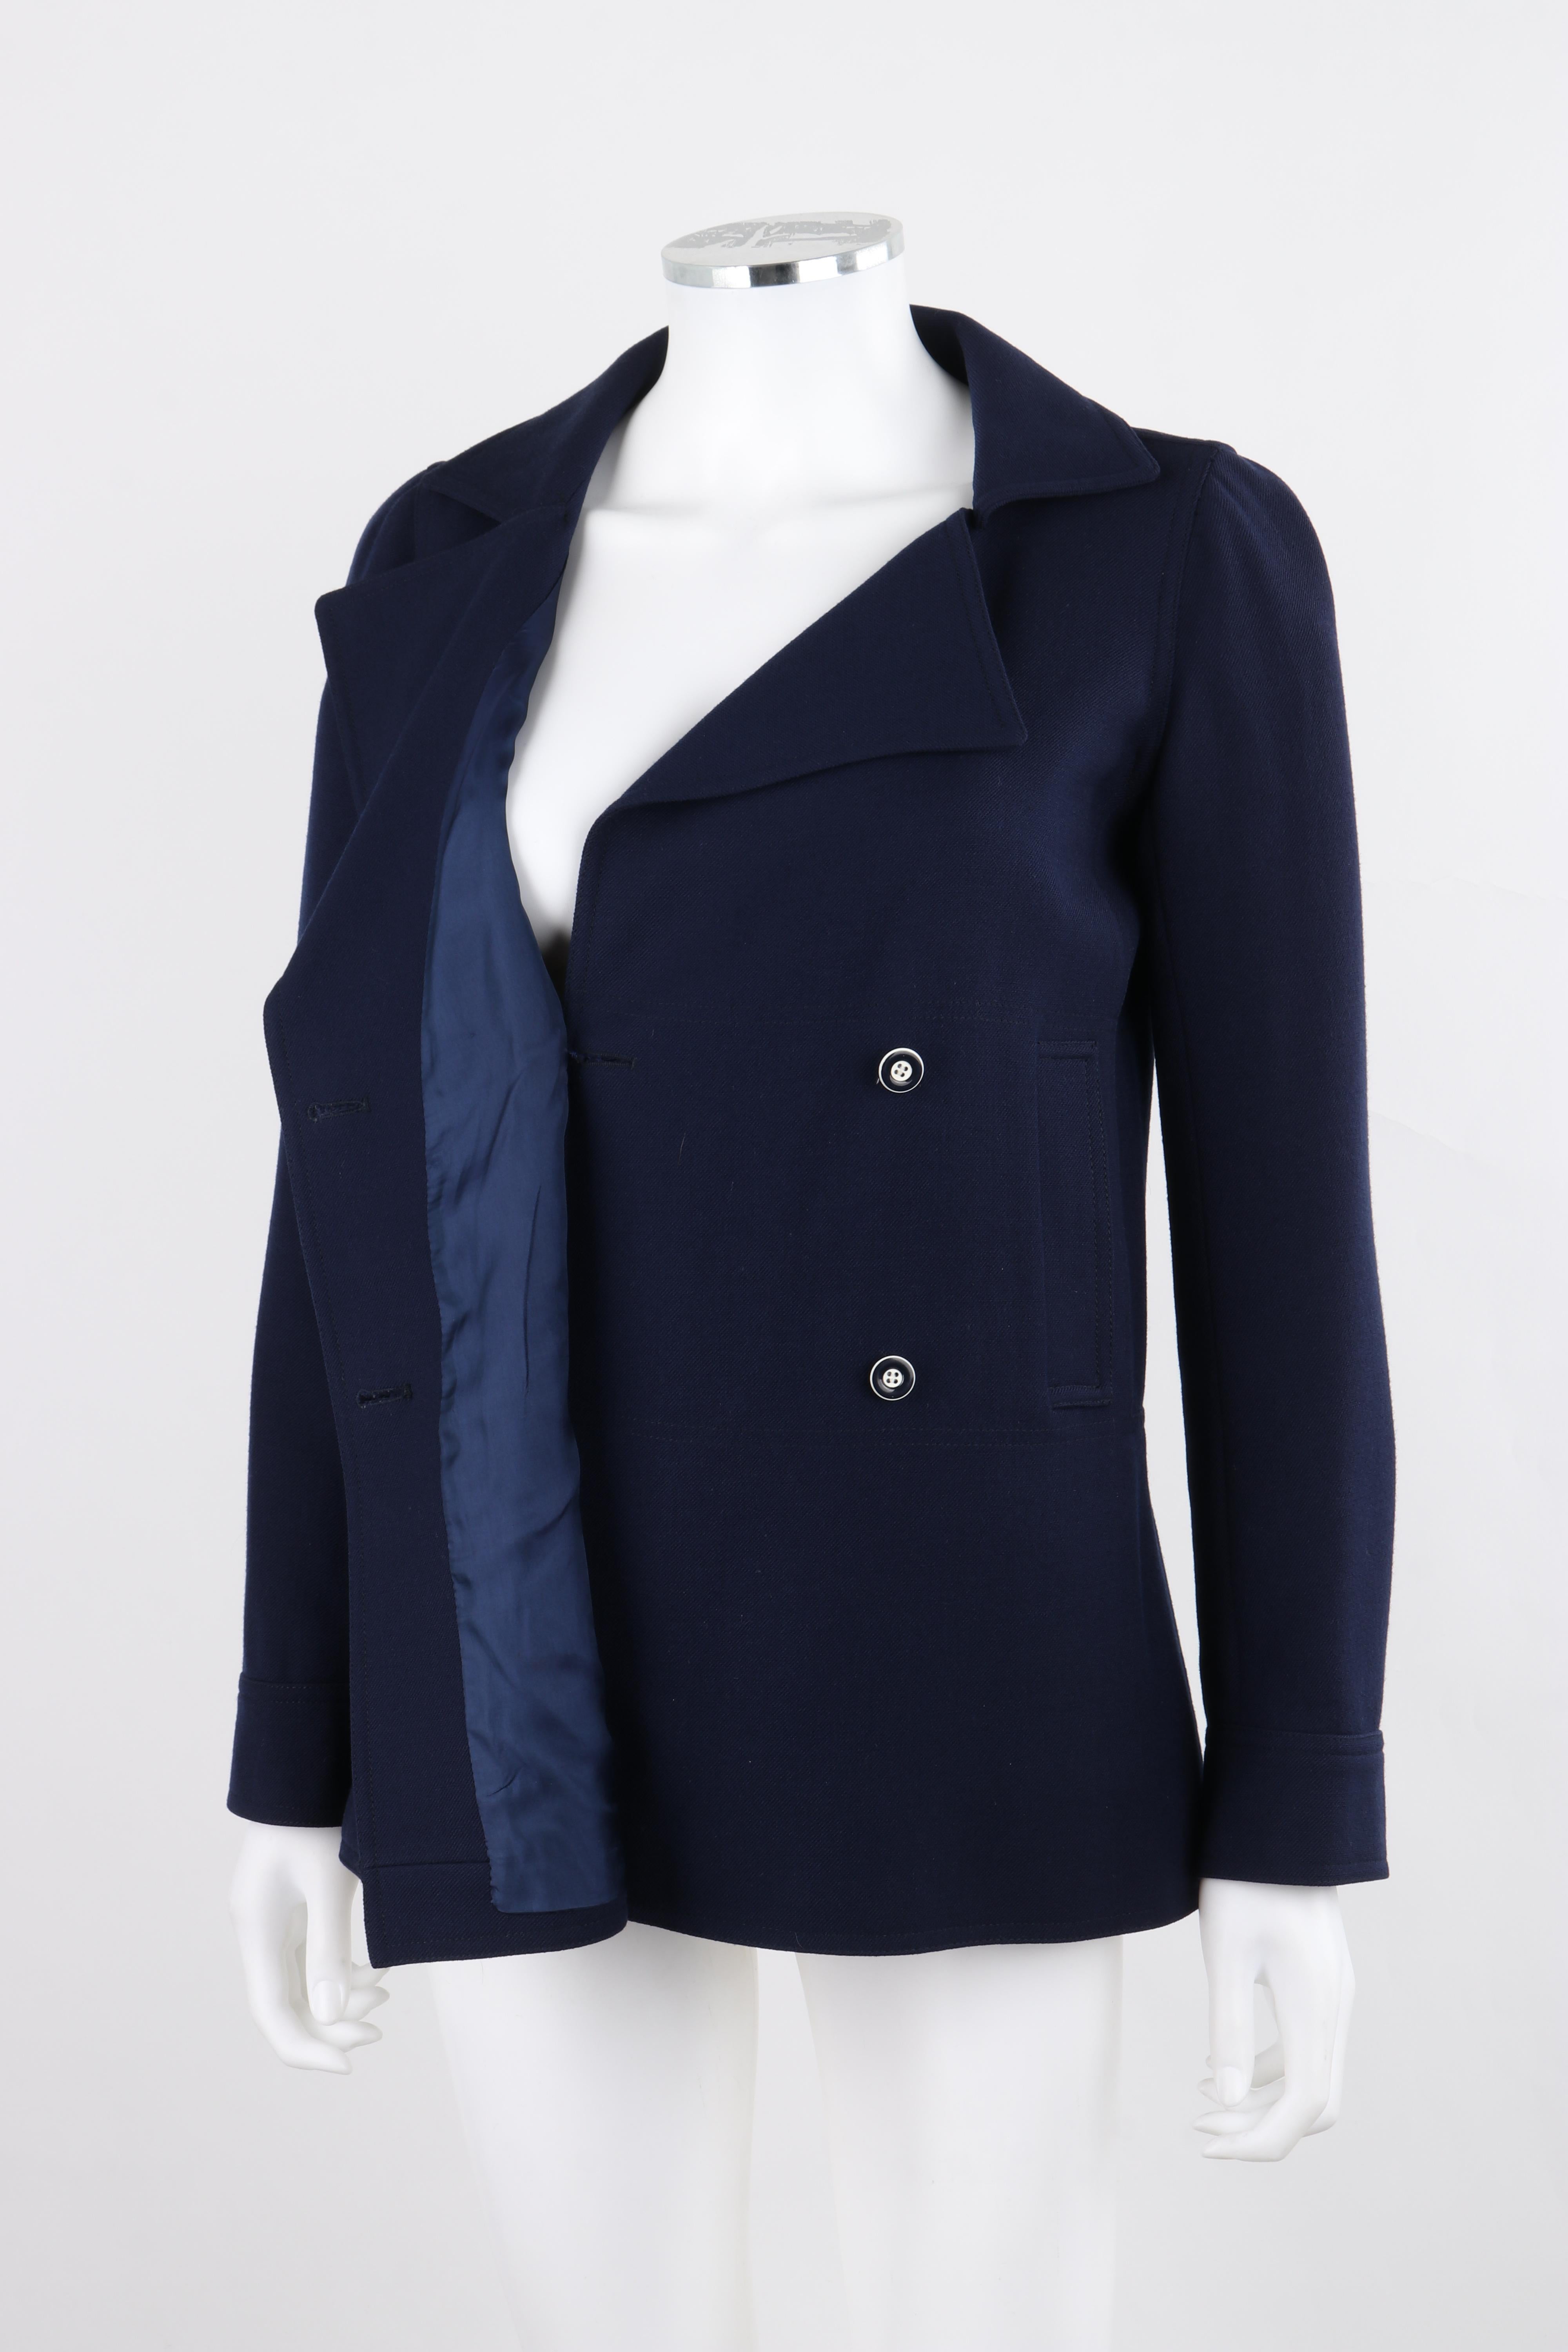 COURREGES PARIS c.1970's Vtg Navy Blue Wool Double Breasted Blazer Jacket  For Sale 4